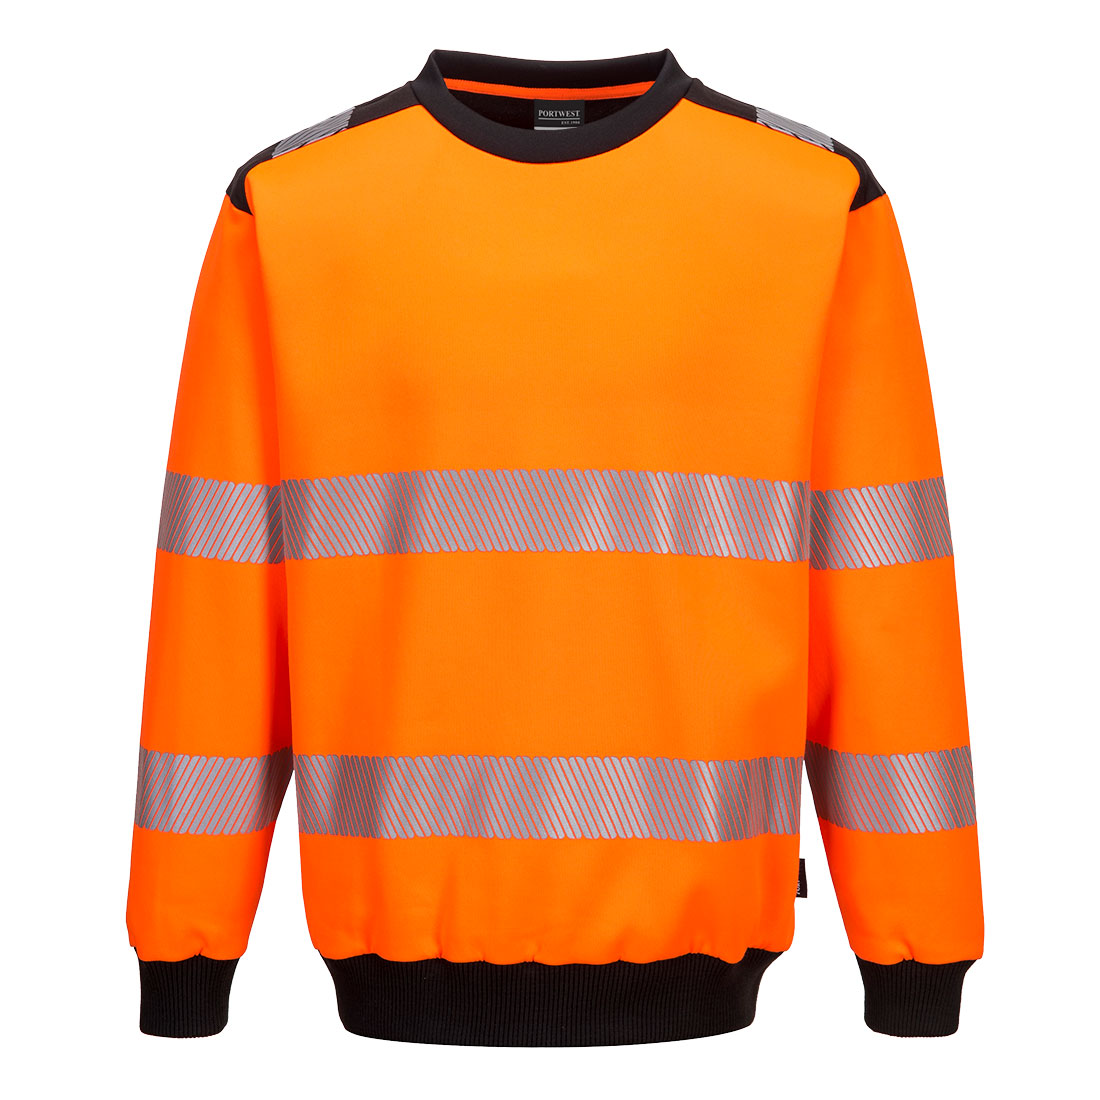 PW3 Hi-Vis Crew Neck Sweatshirt - Orange/Black